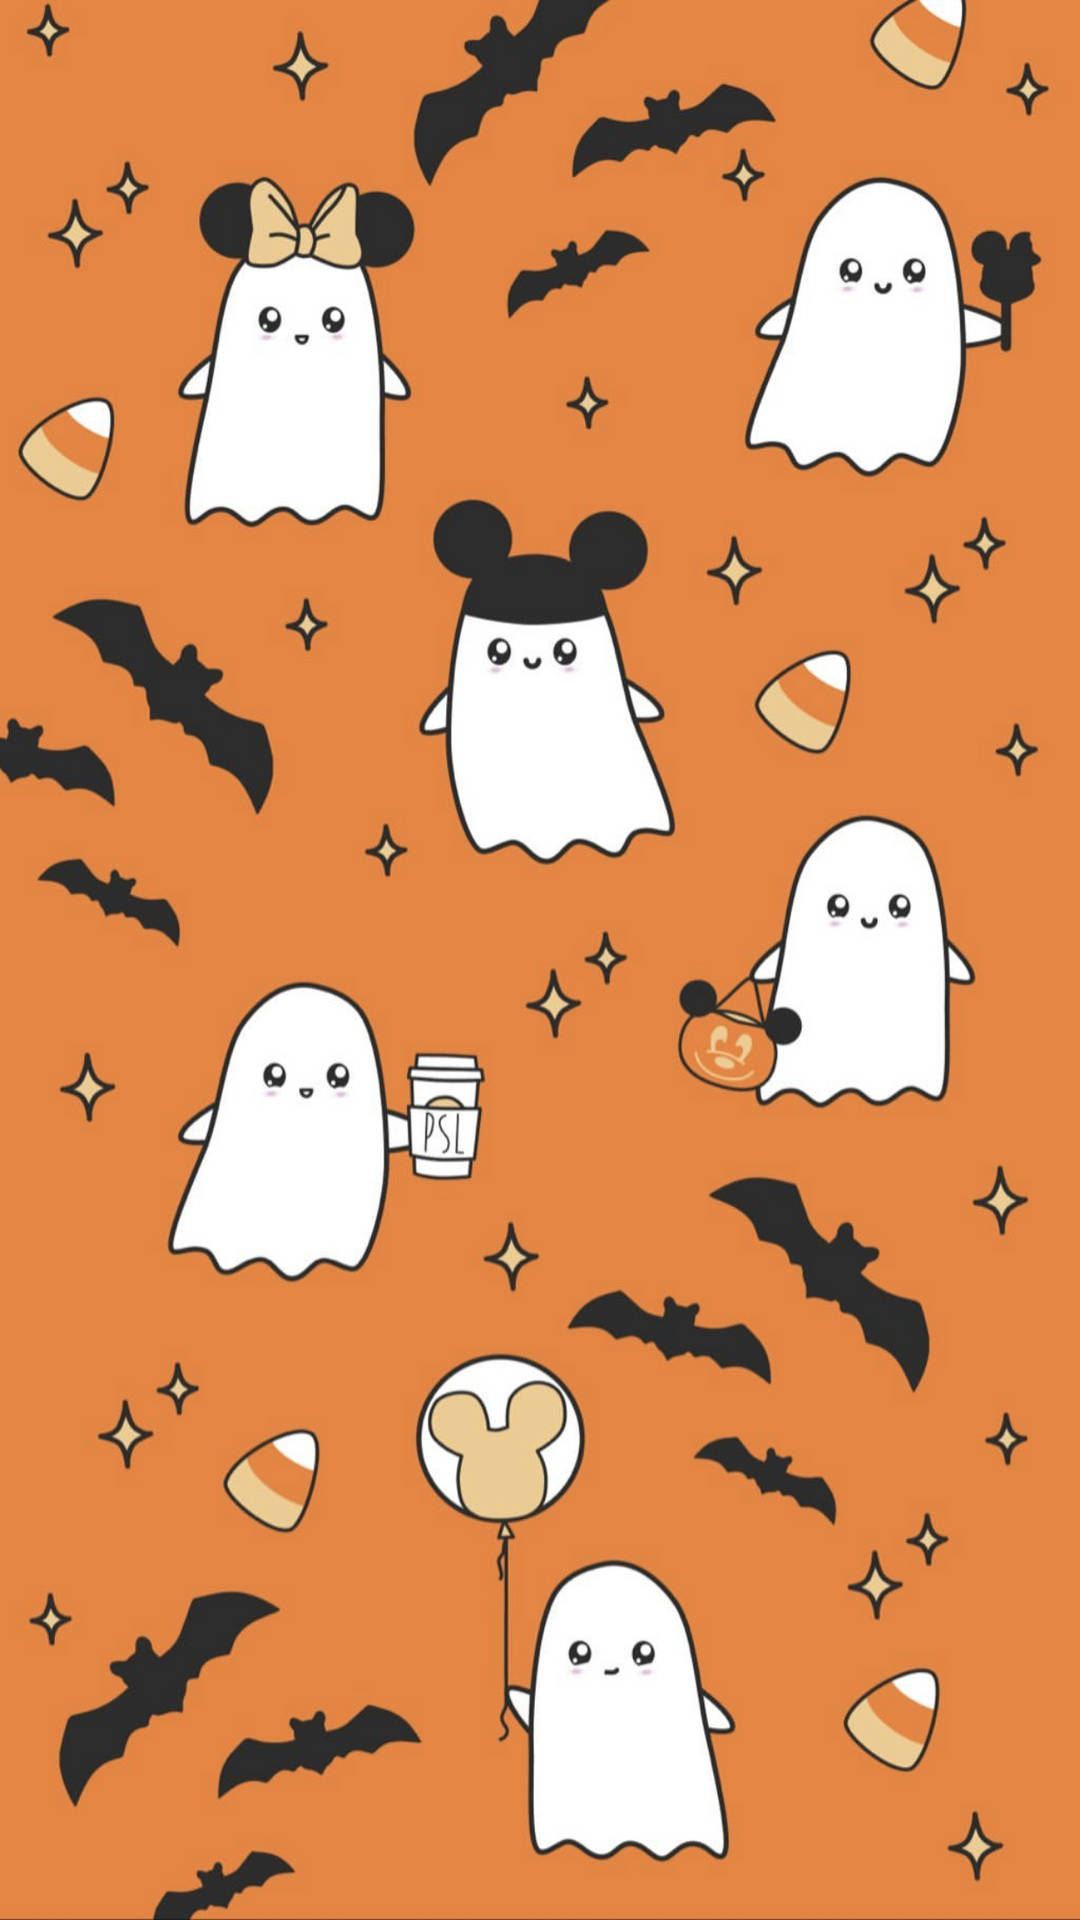 Download Ghosts And Bats Cute Disney Halloween Wallpaper | Wallpapers.com